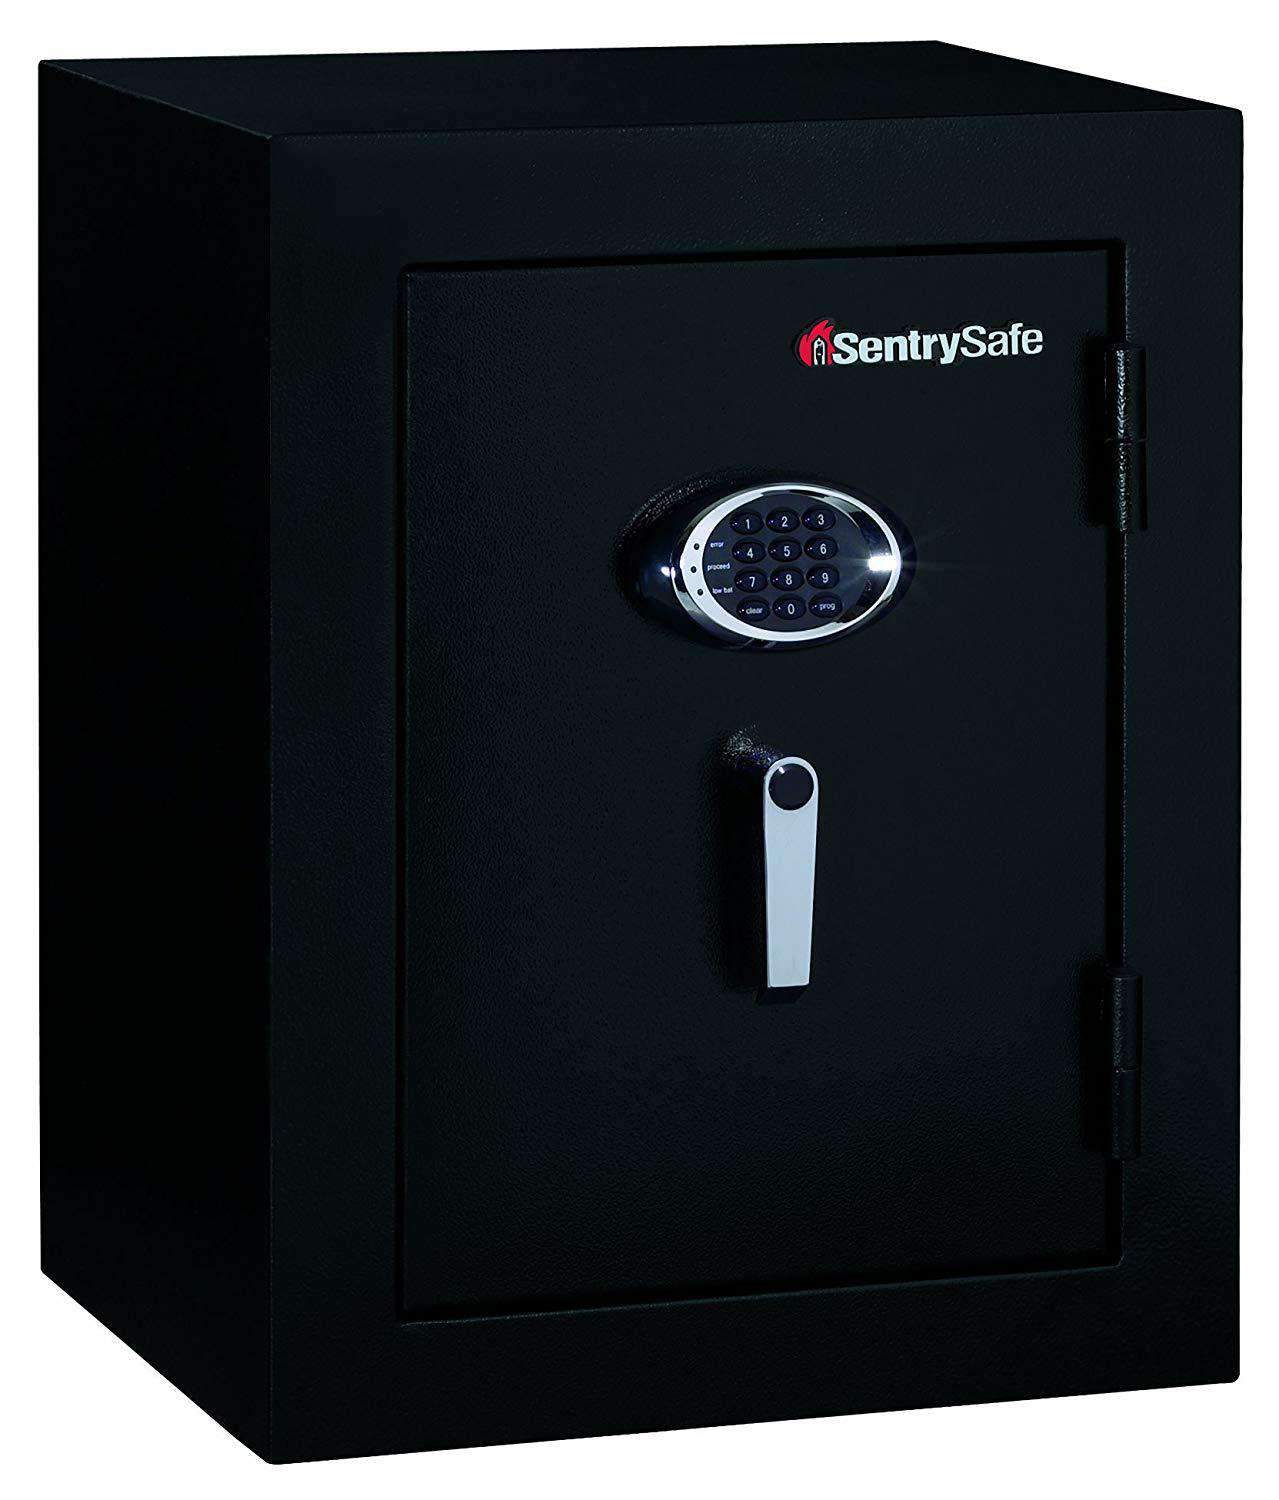 Sentry Safes Executive Business Fire/Water Proof Electronic Keypad Safe - Senior.com Security Safes